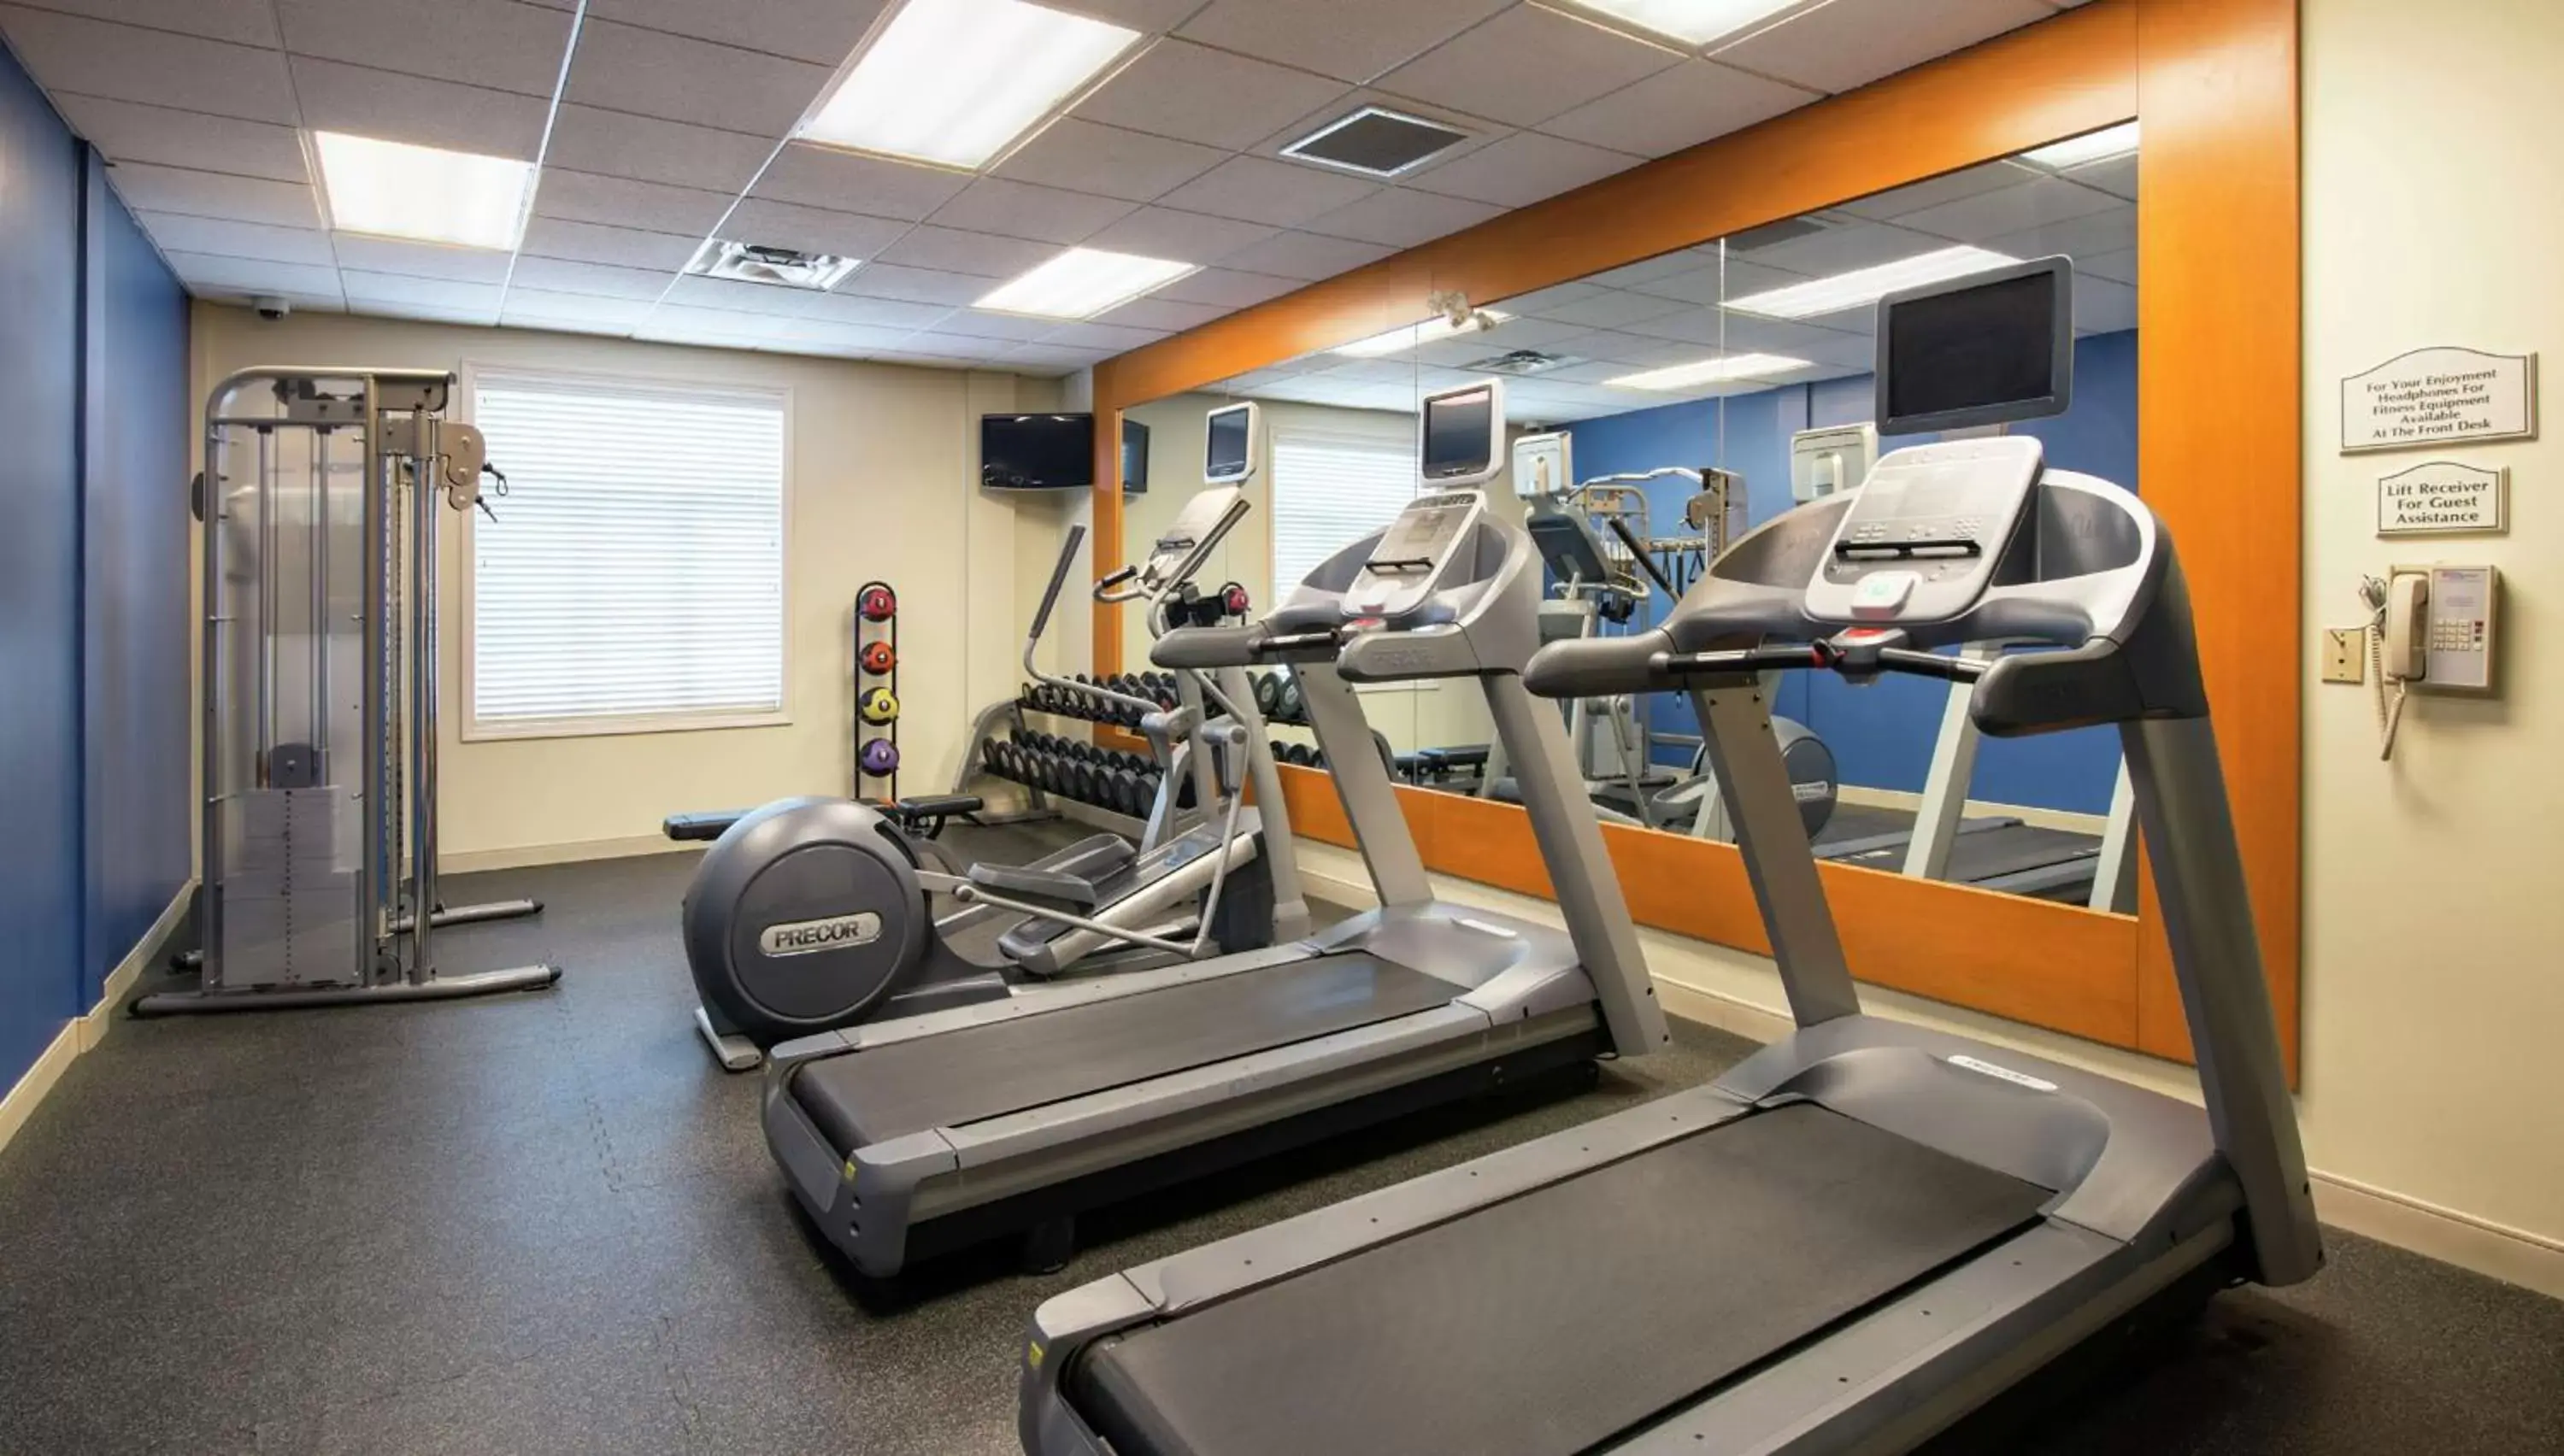 Fitness centre/facilities, Fitness Center/Facilities in Hilton Garden Inn West Edmonton